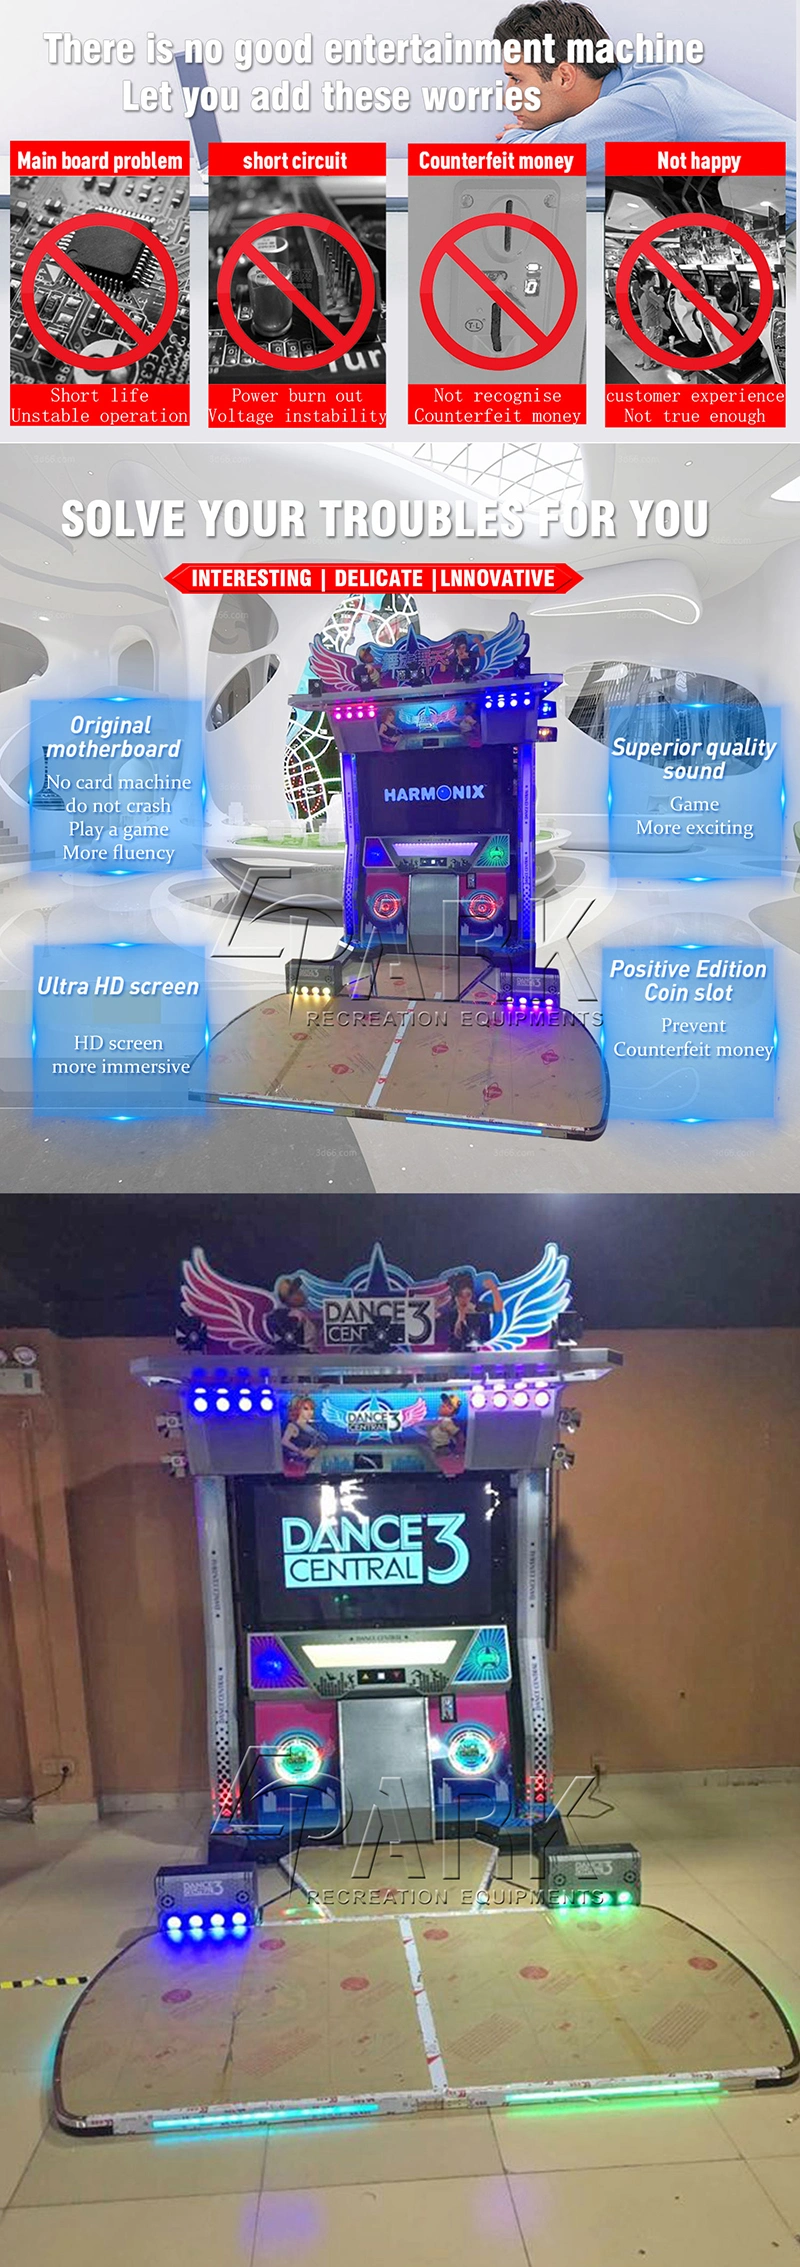 Dancing Entertainment Video Arcade Game Machine